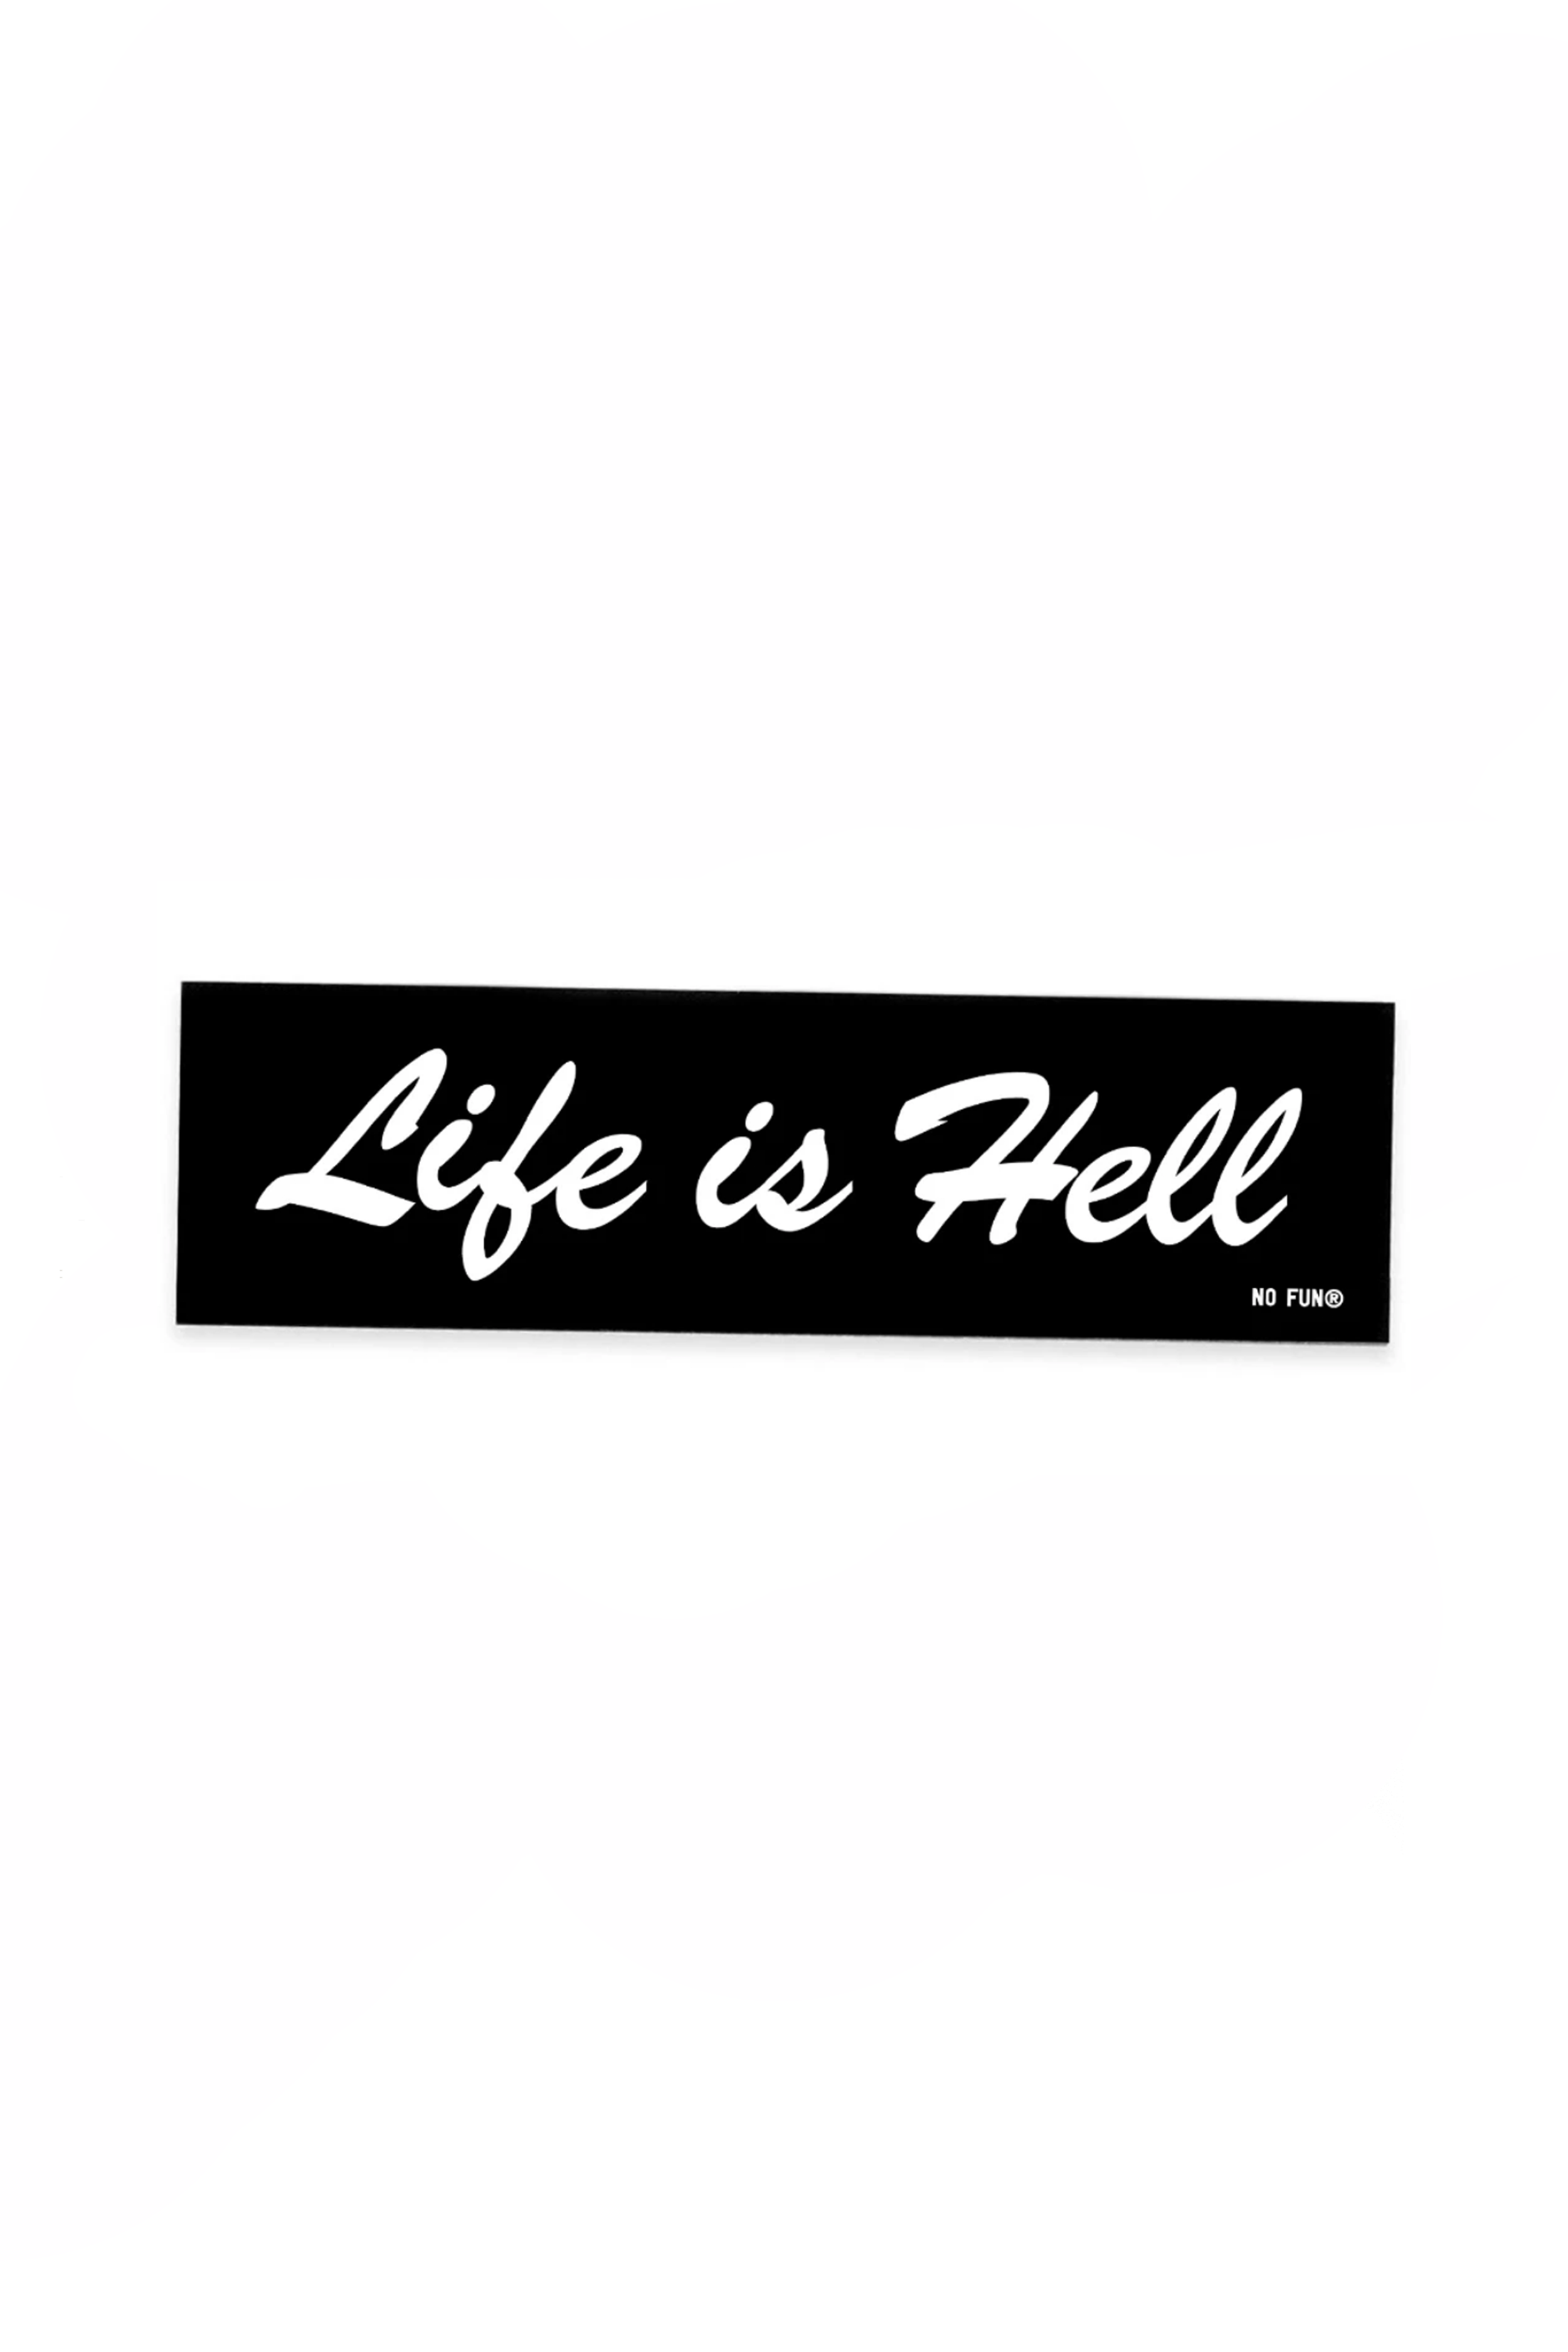 Life is Hell Bumper Sticker